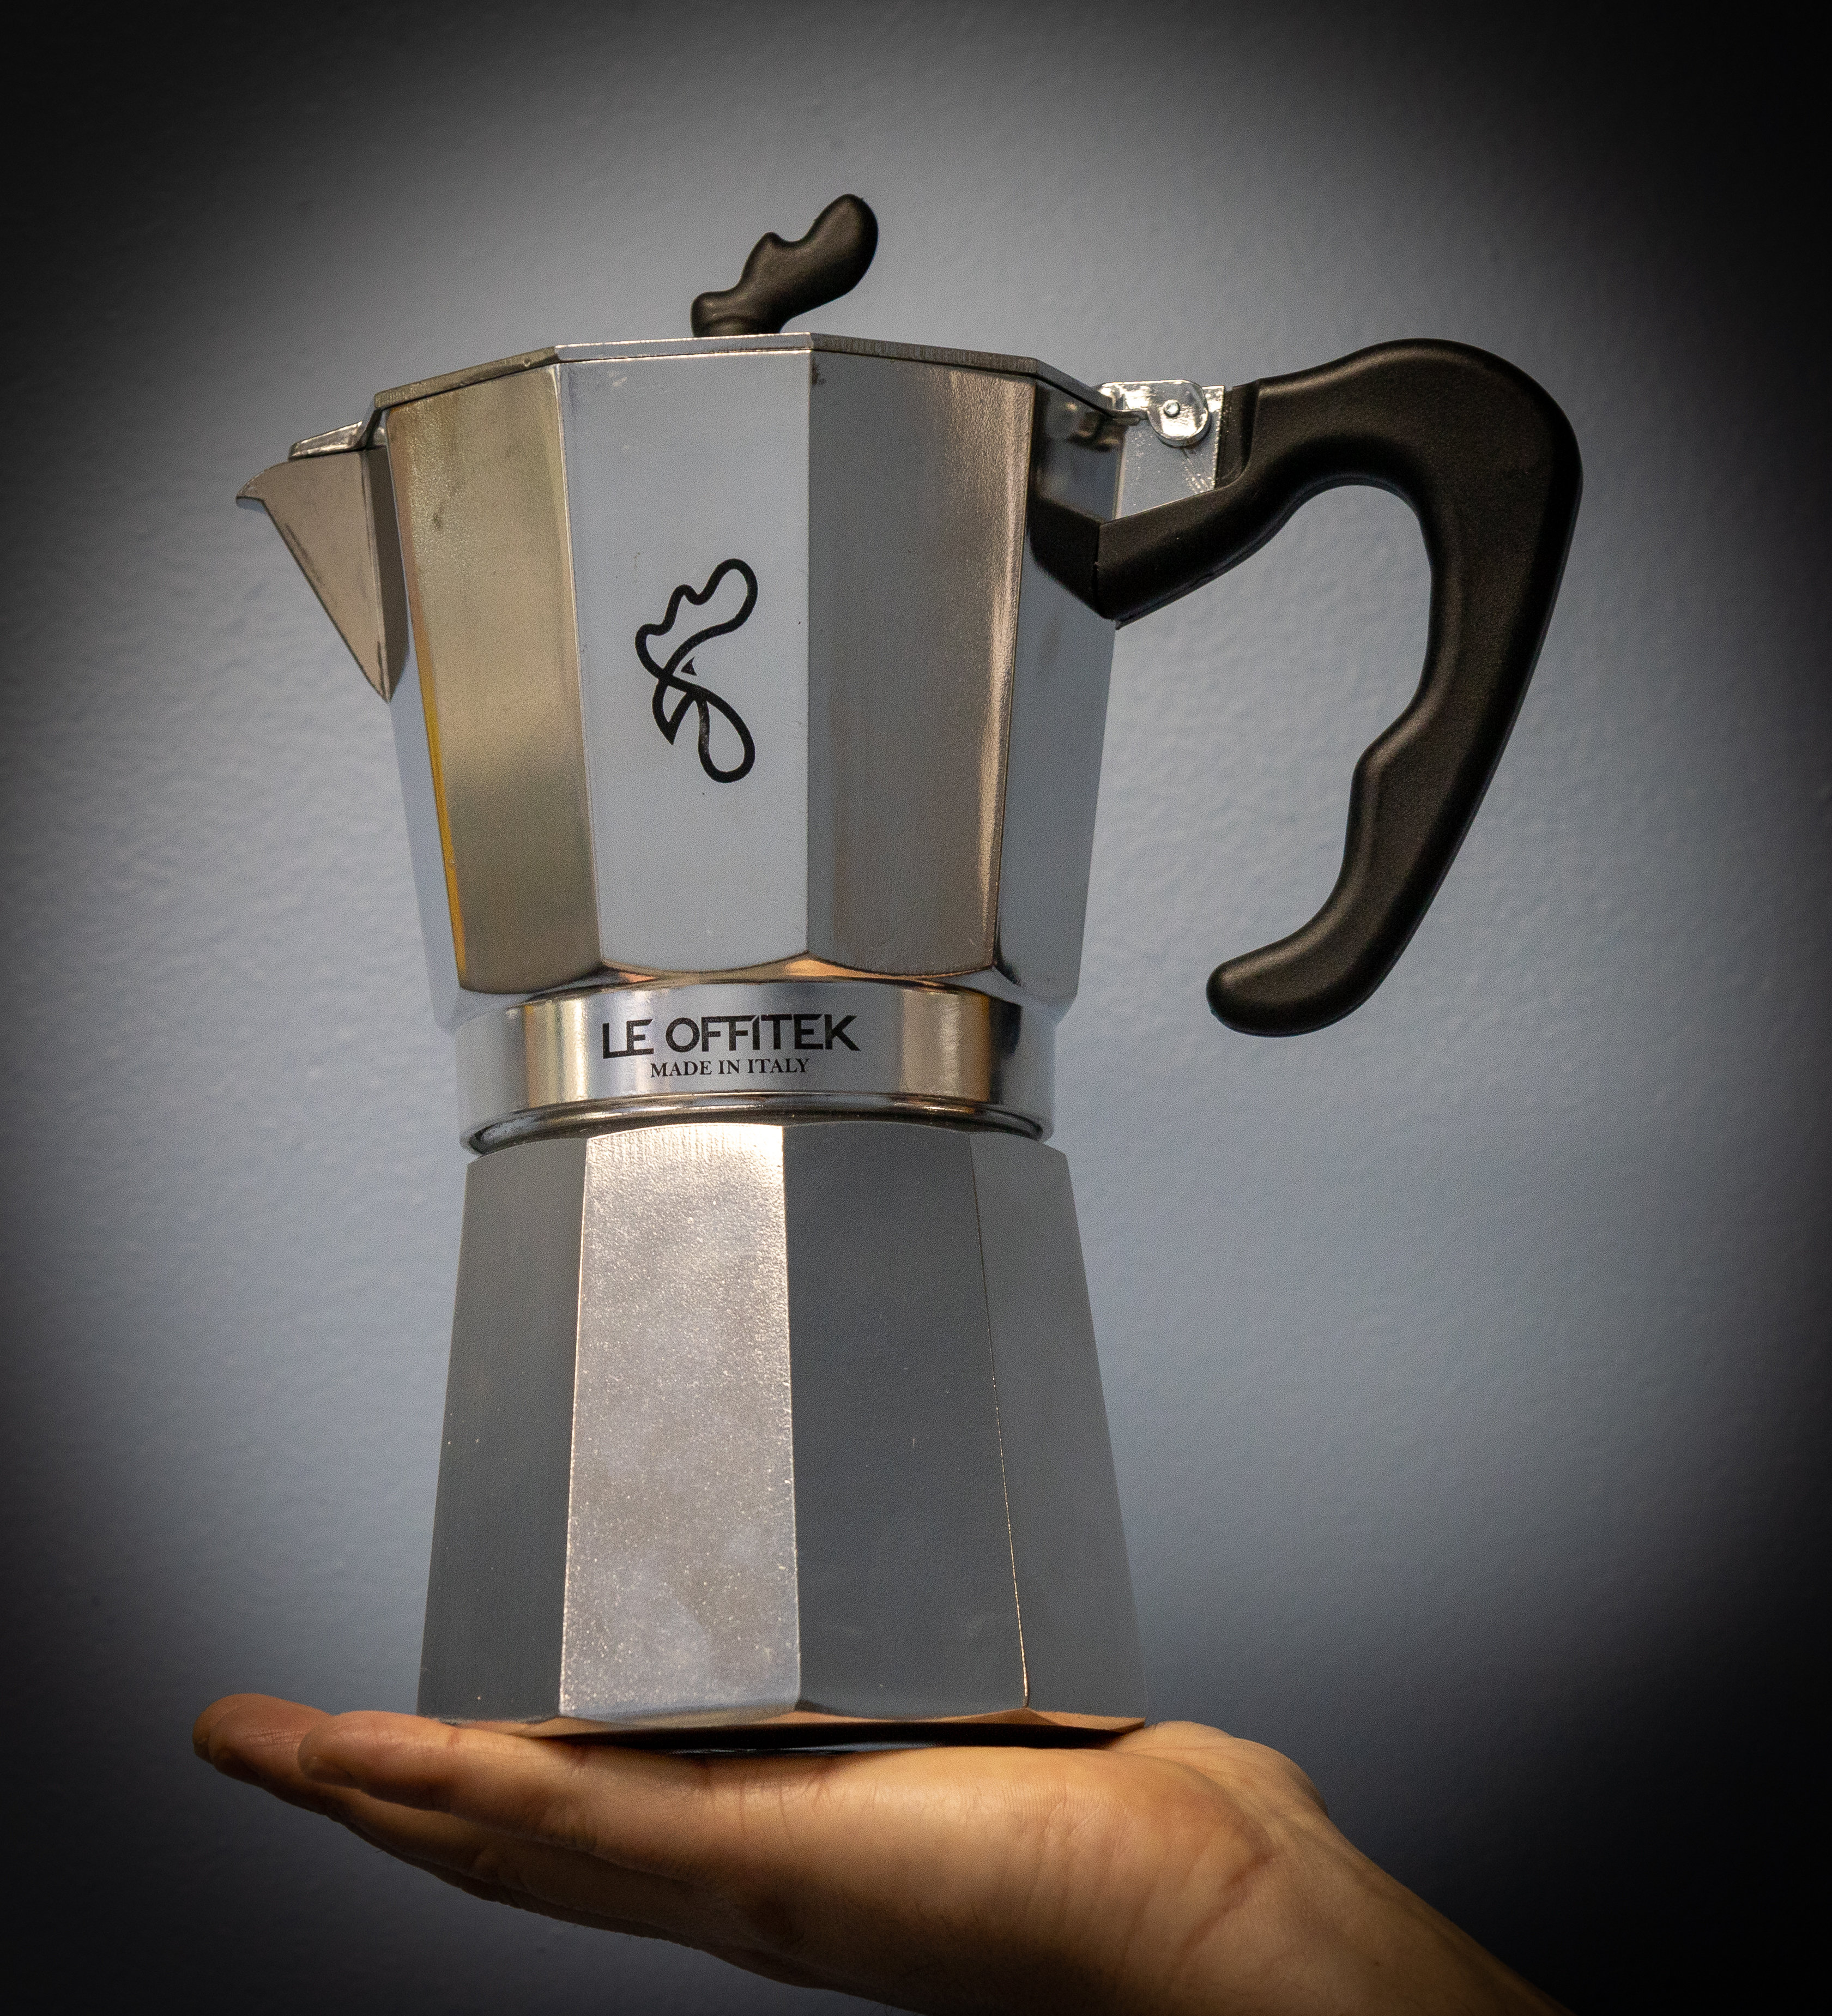 Bialetti Aluminum 9 Cup Stovetop Steamer Espresso Coffee Maker Brewer,  Silver 